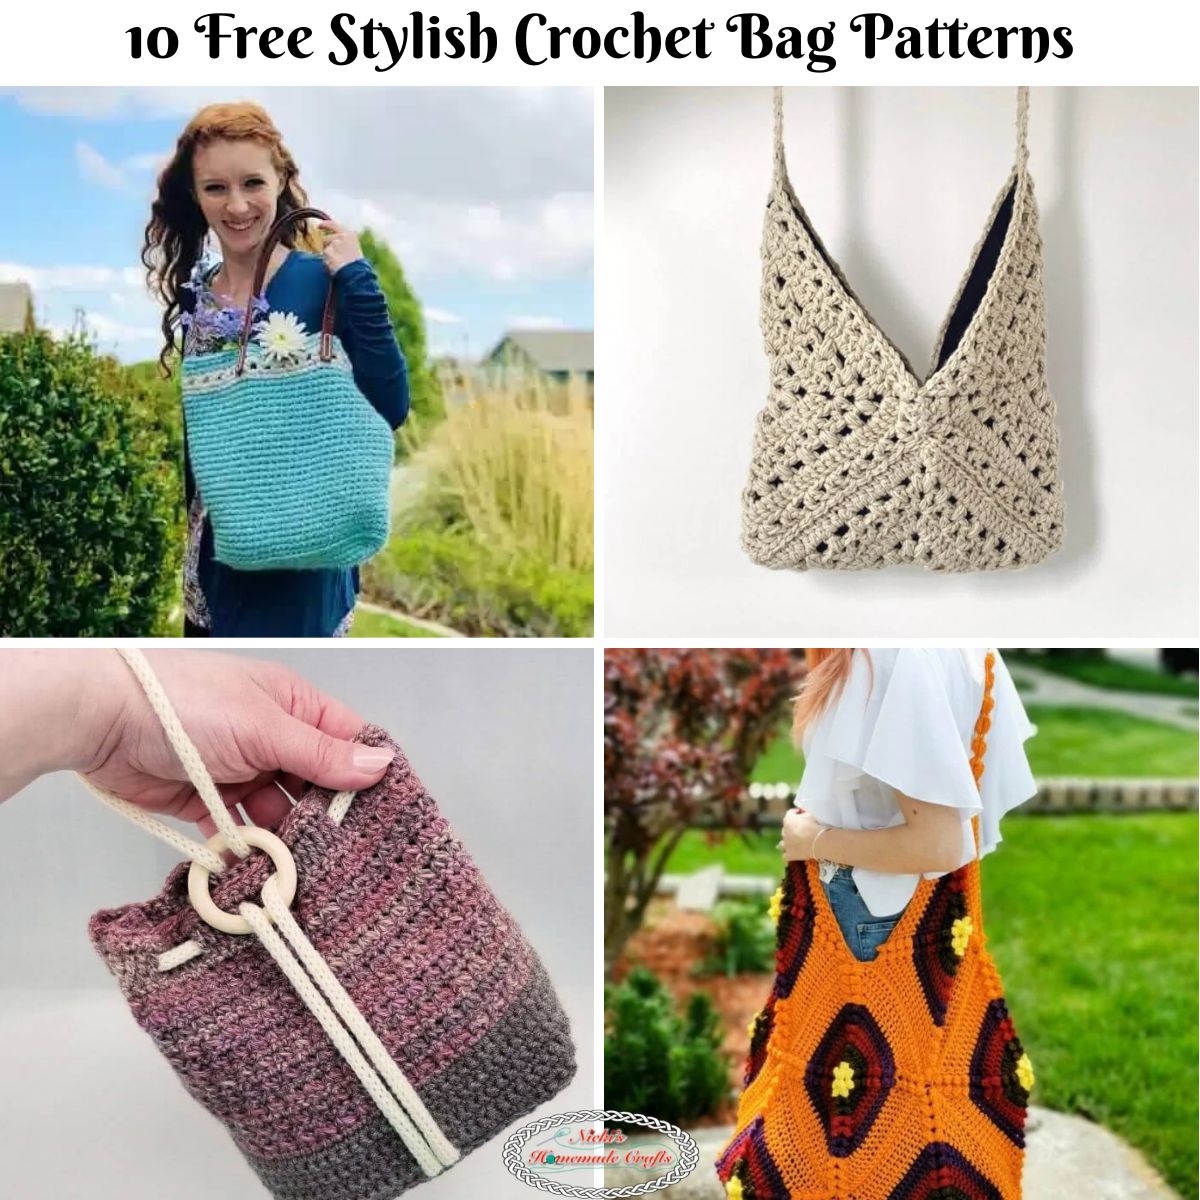 Crochet Bag Pattern Design Ideas for This Summer - Beauty Crochet Patterns!